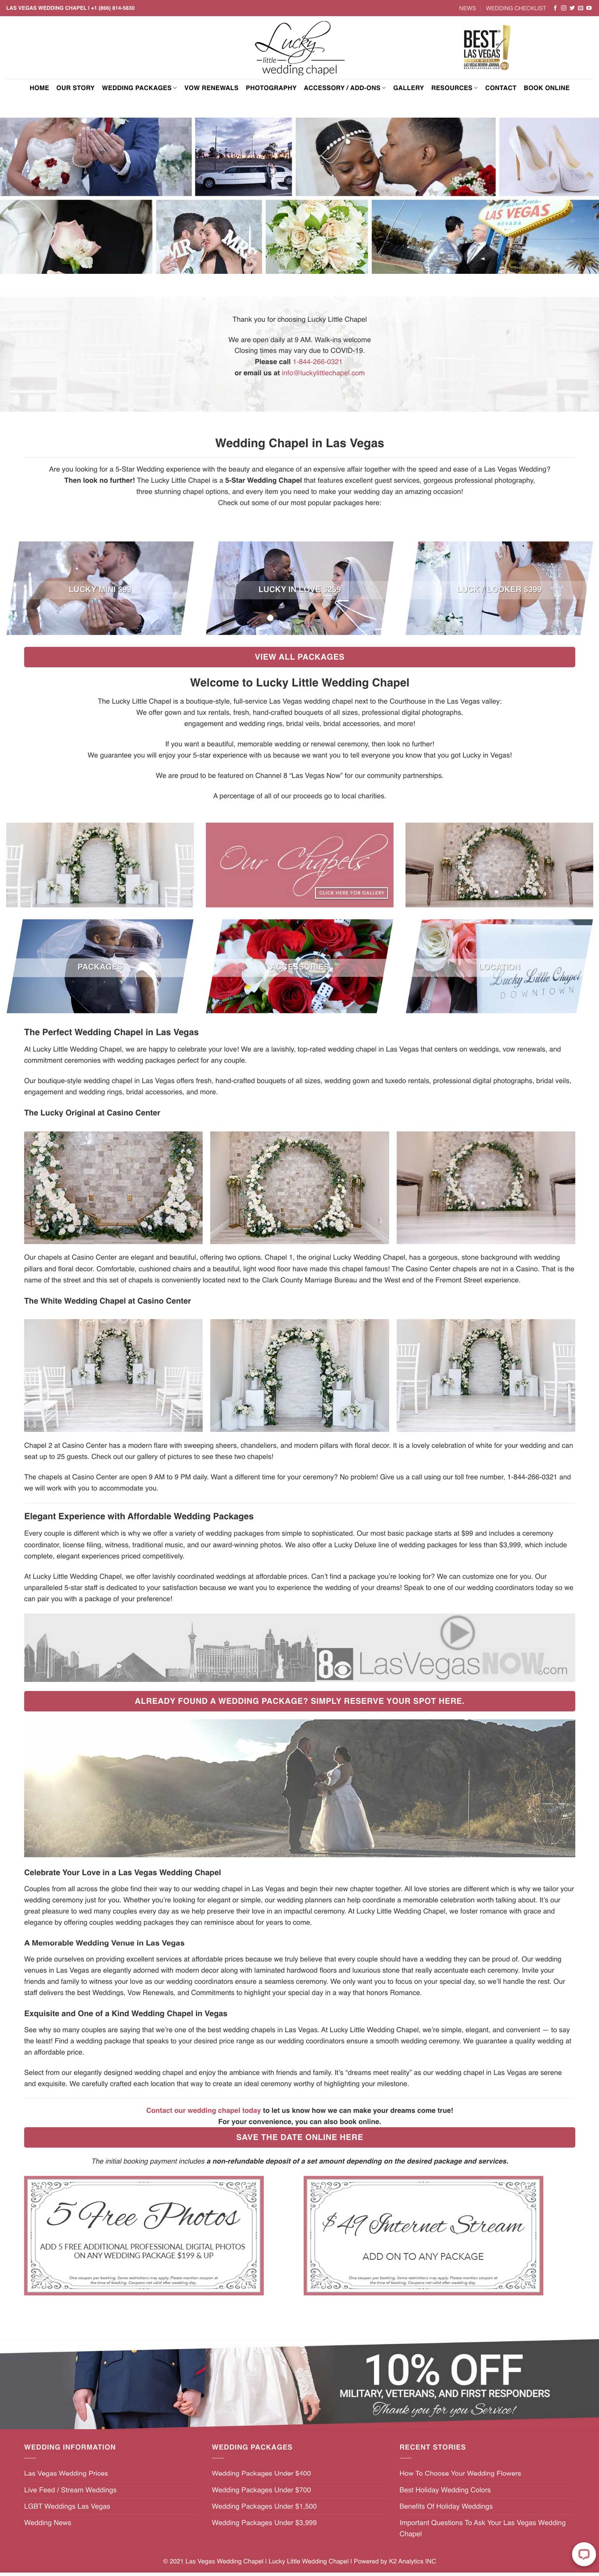 Web Design Website - Wedding Chapel Web Design Red Color